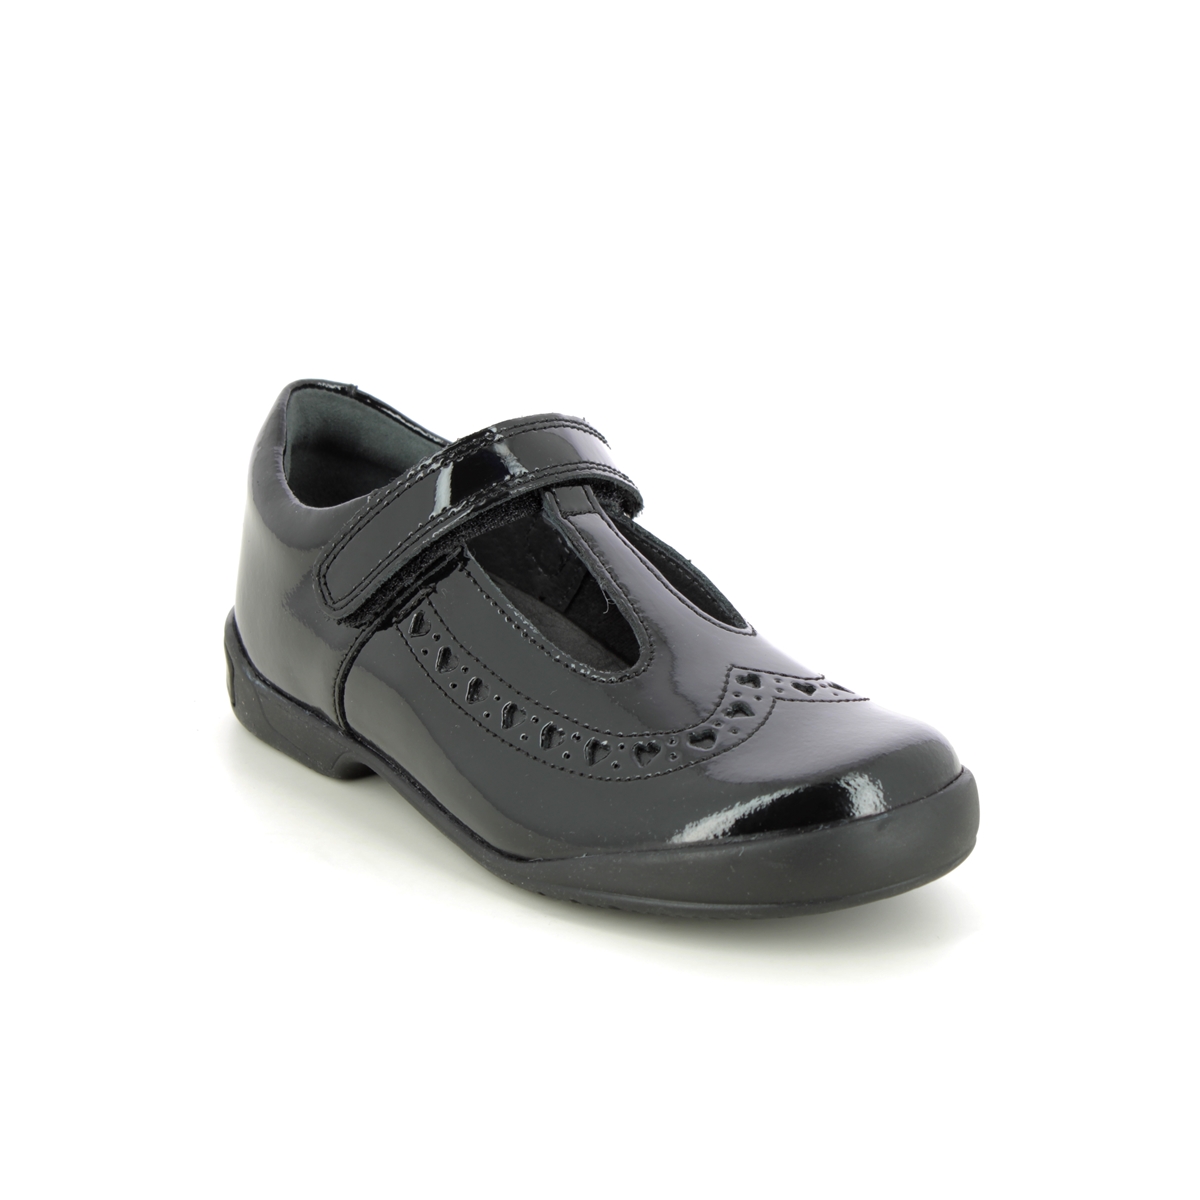 Start Rite - Leapfrog In Black Patent 2789-35E In Size 12.5 In Plain Black Patent For School Girls Shoes  In Black Patent For kids